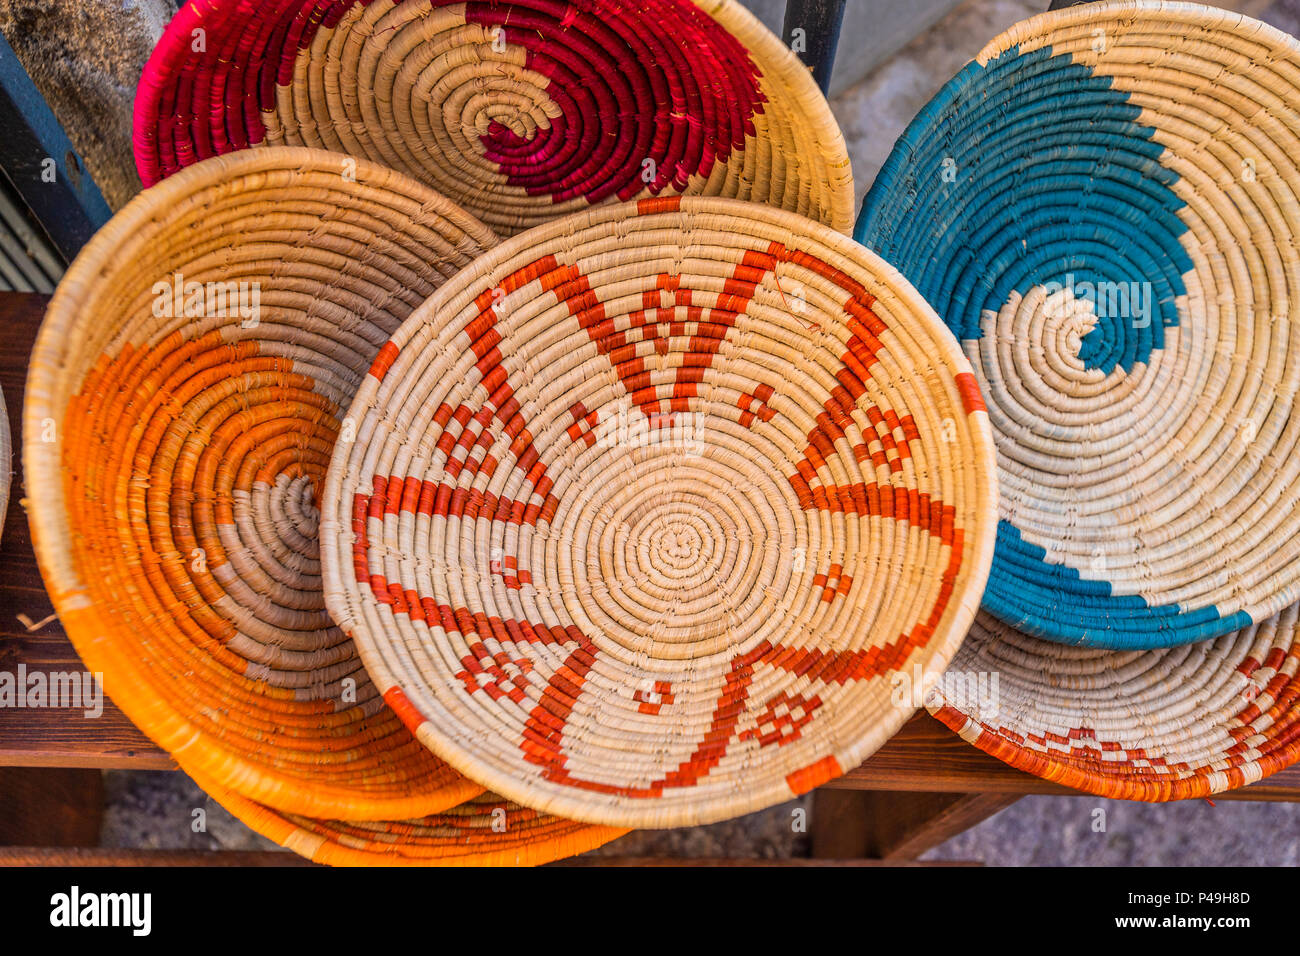 Italy Sardinia Anglona Castelsardo baskets typical handicraft Stock Photo